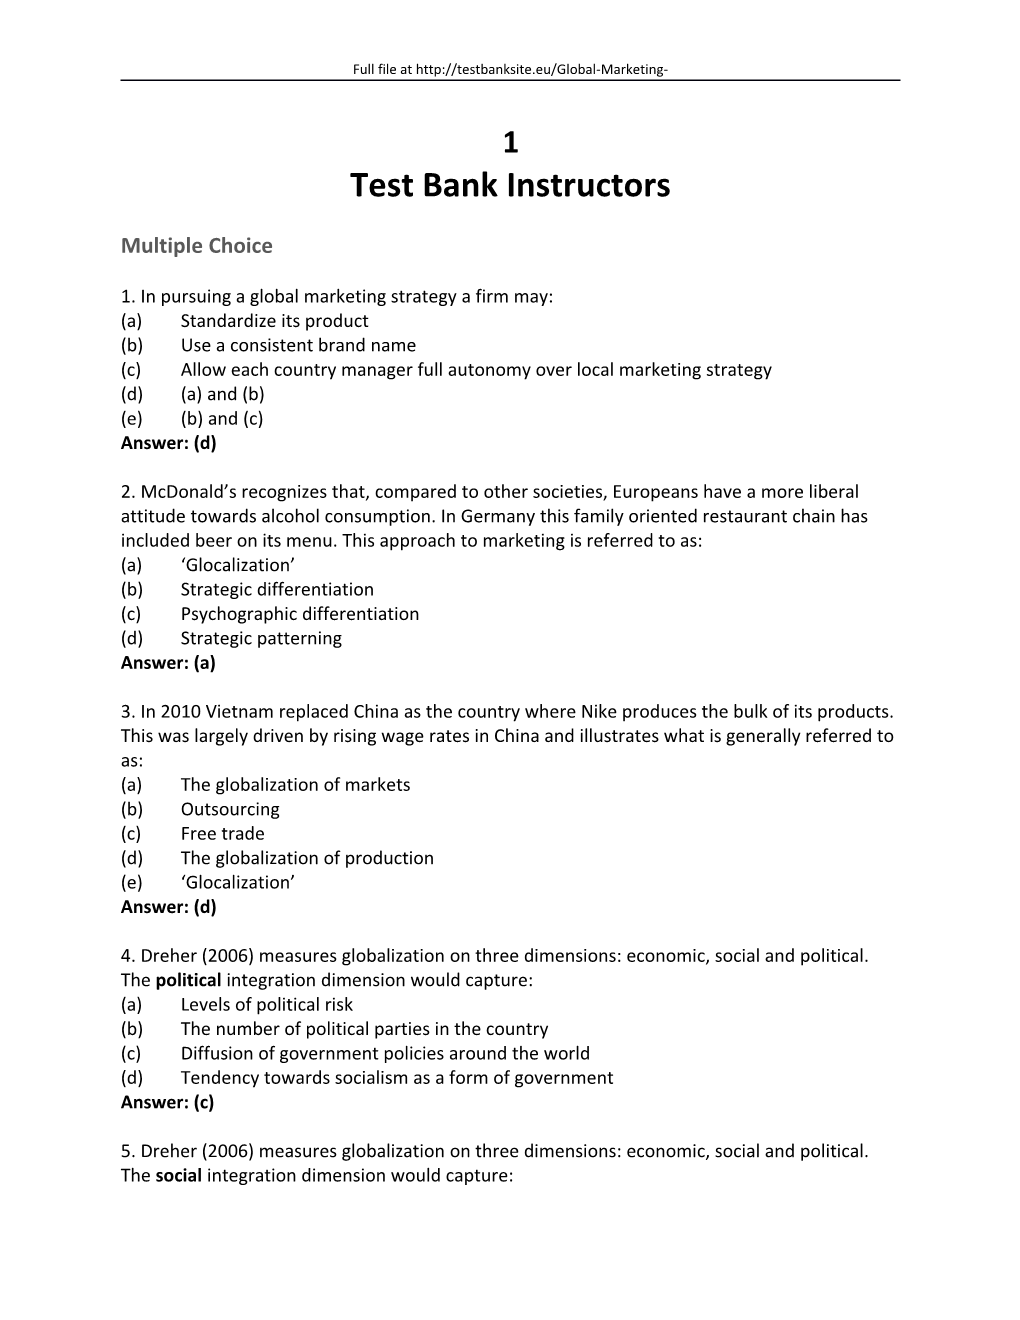 Test Bank Instructors